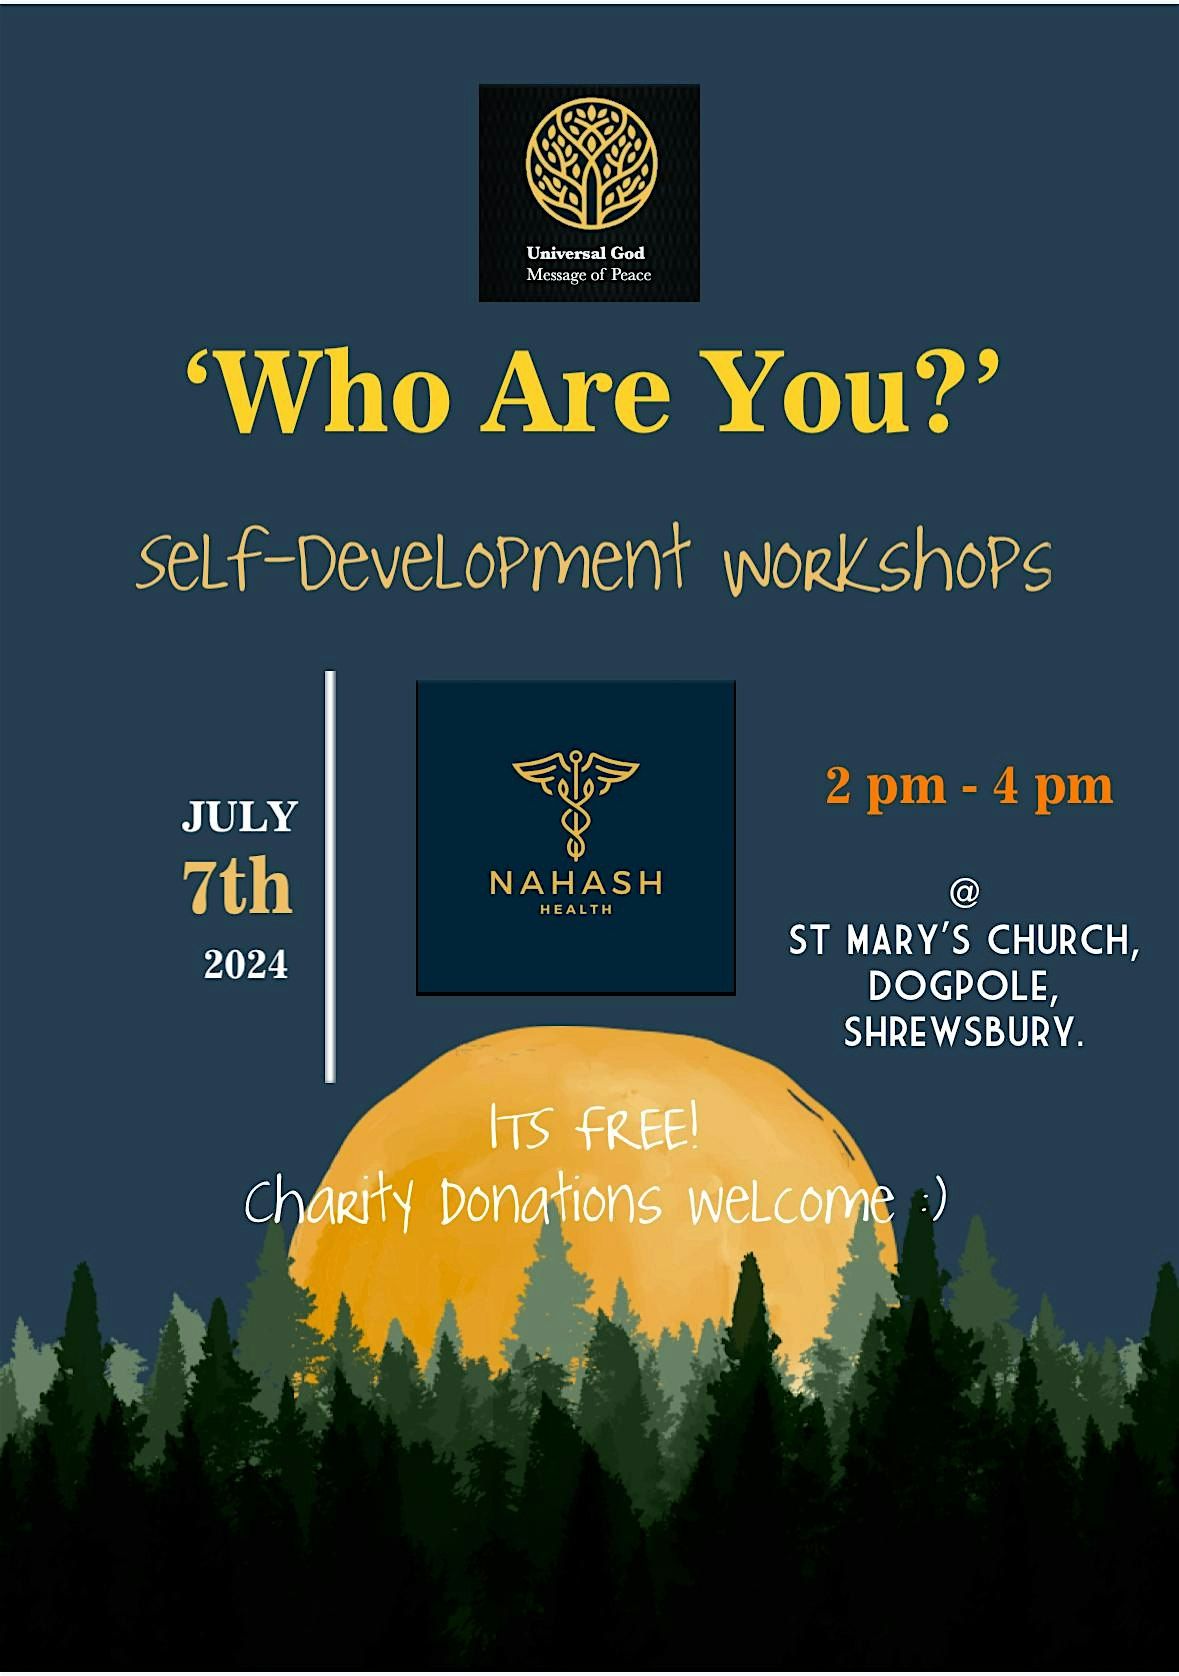 Self-Development for Wellbeing Workshop